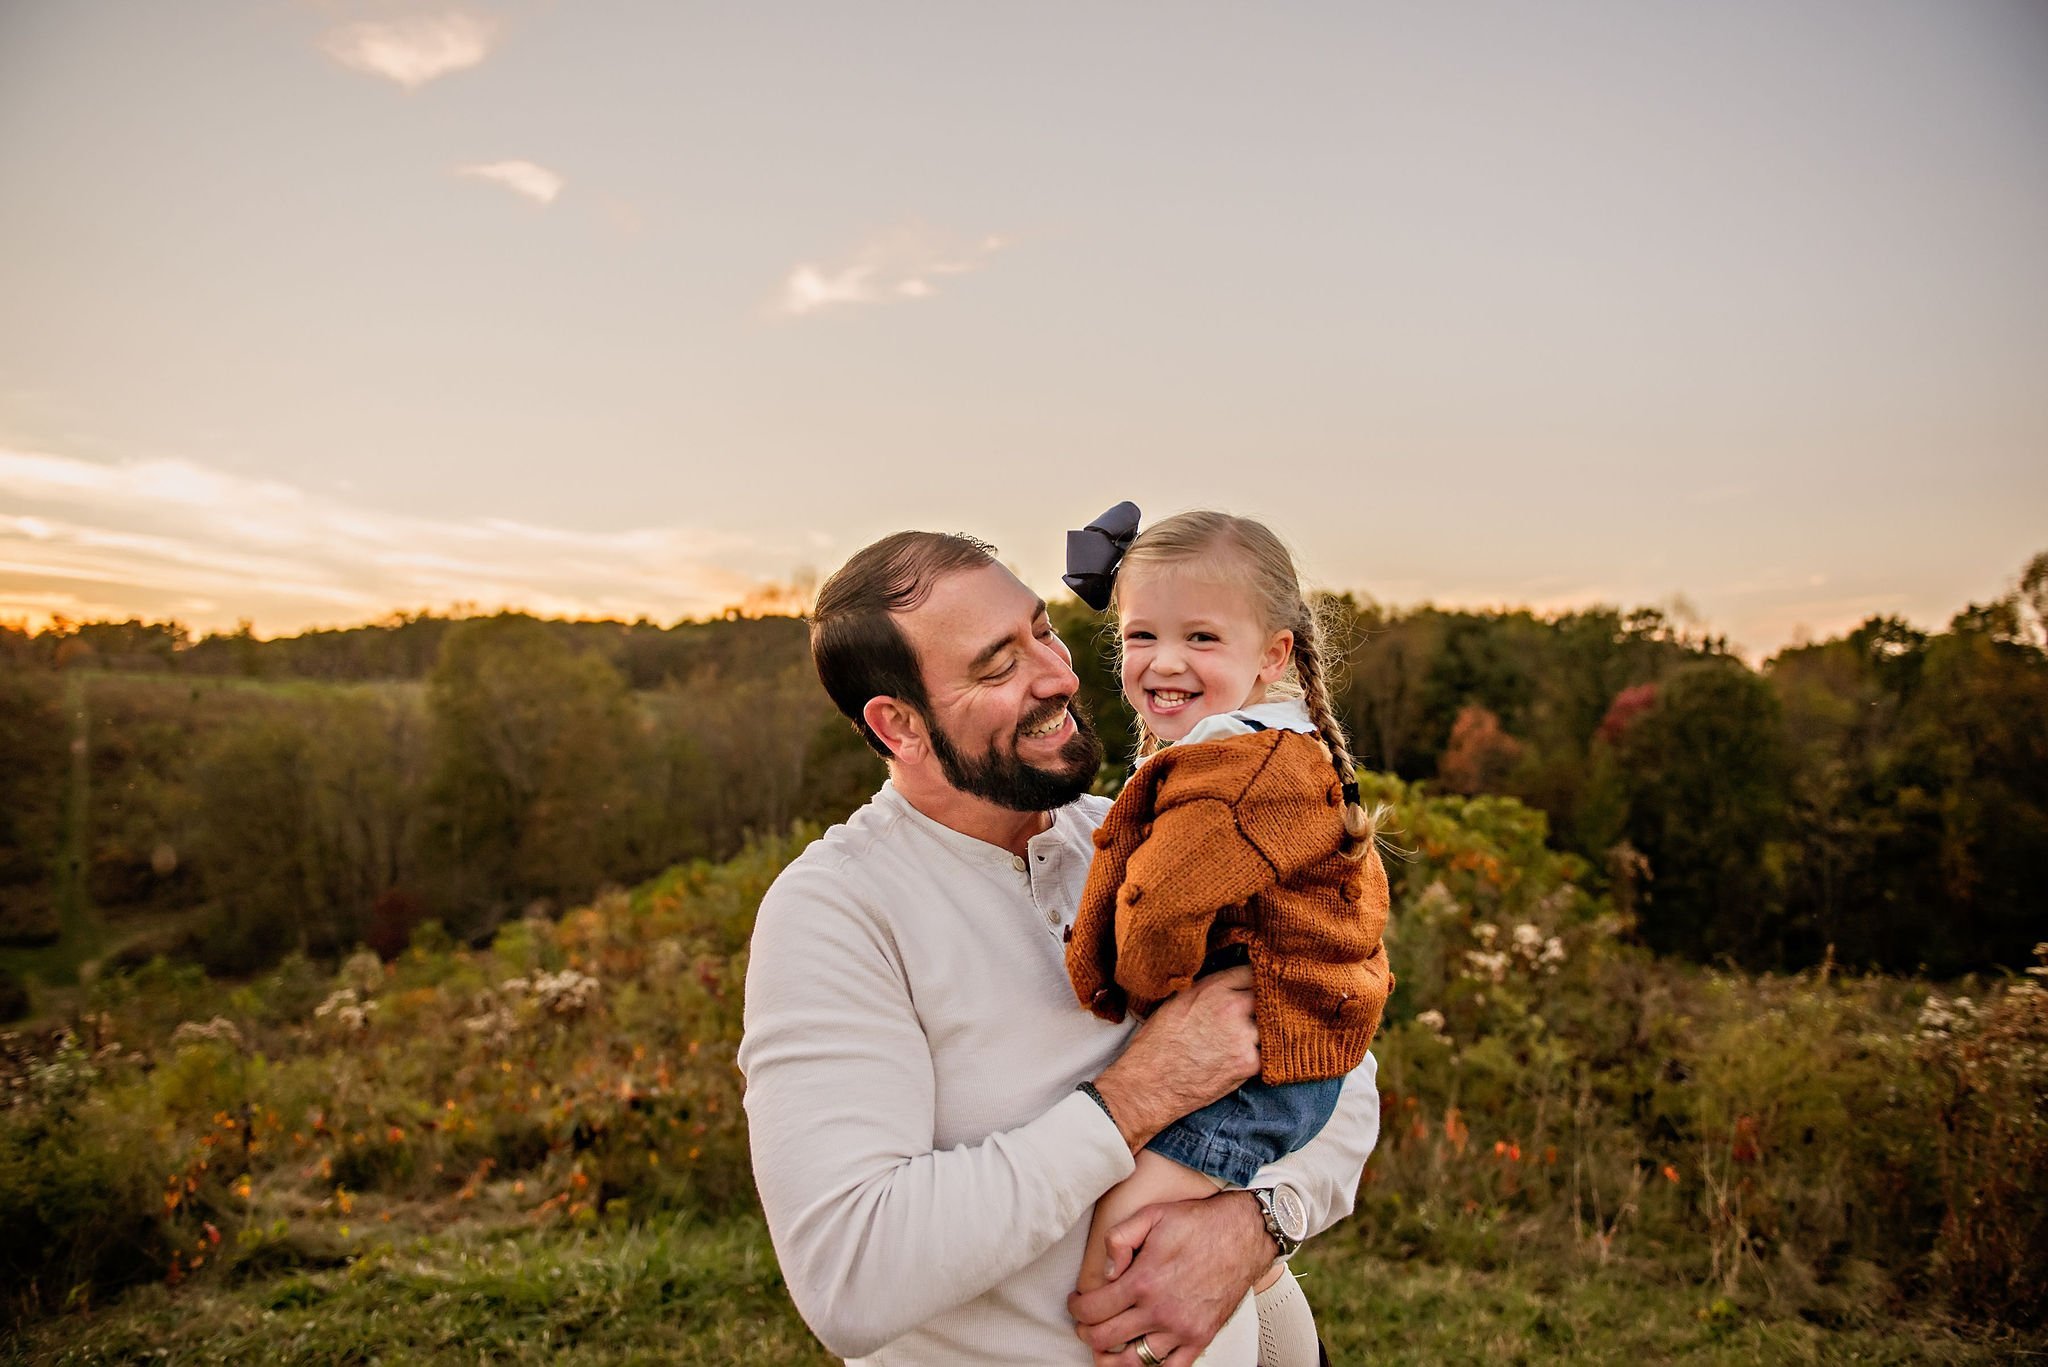 canton-ohio-photographer-family-maternity-outdoor-sunset-lauren-grayson-photography-15.jpeg